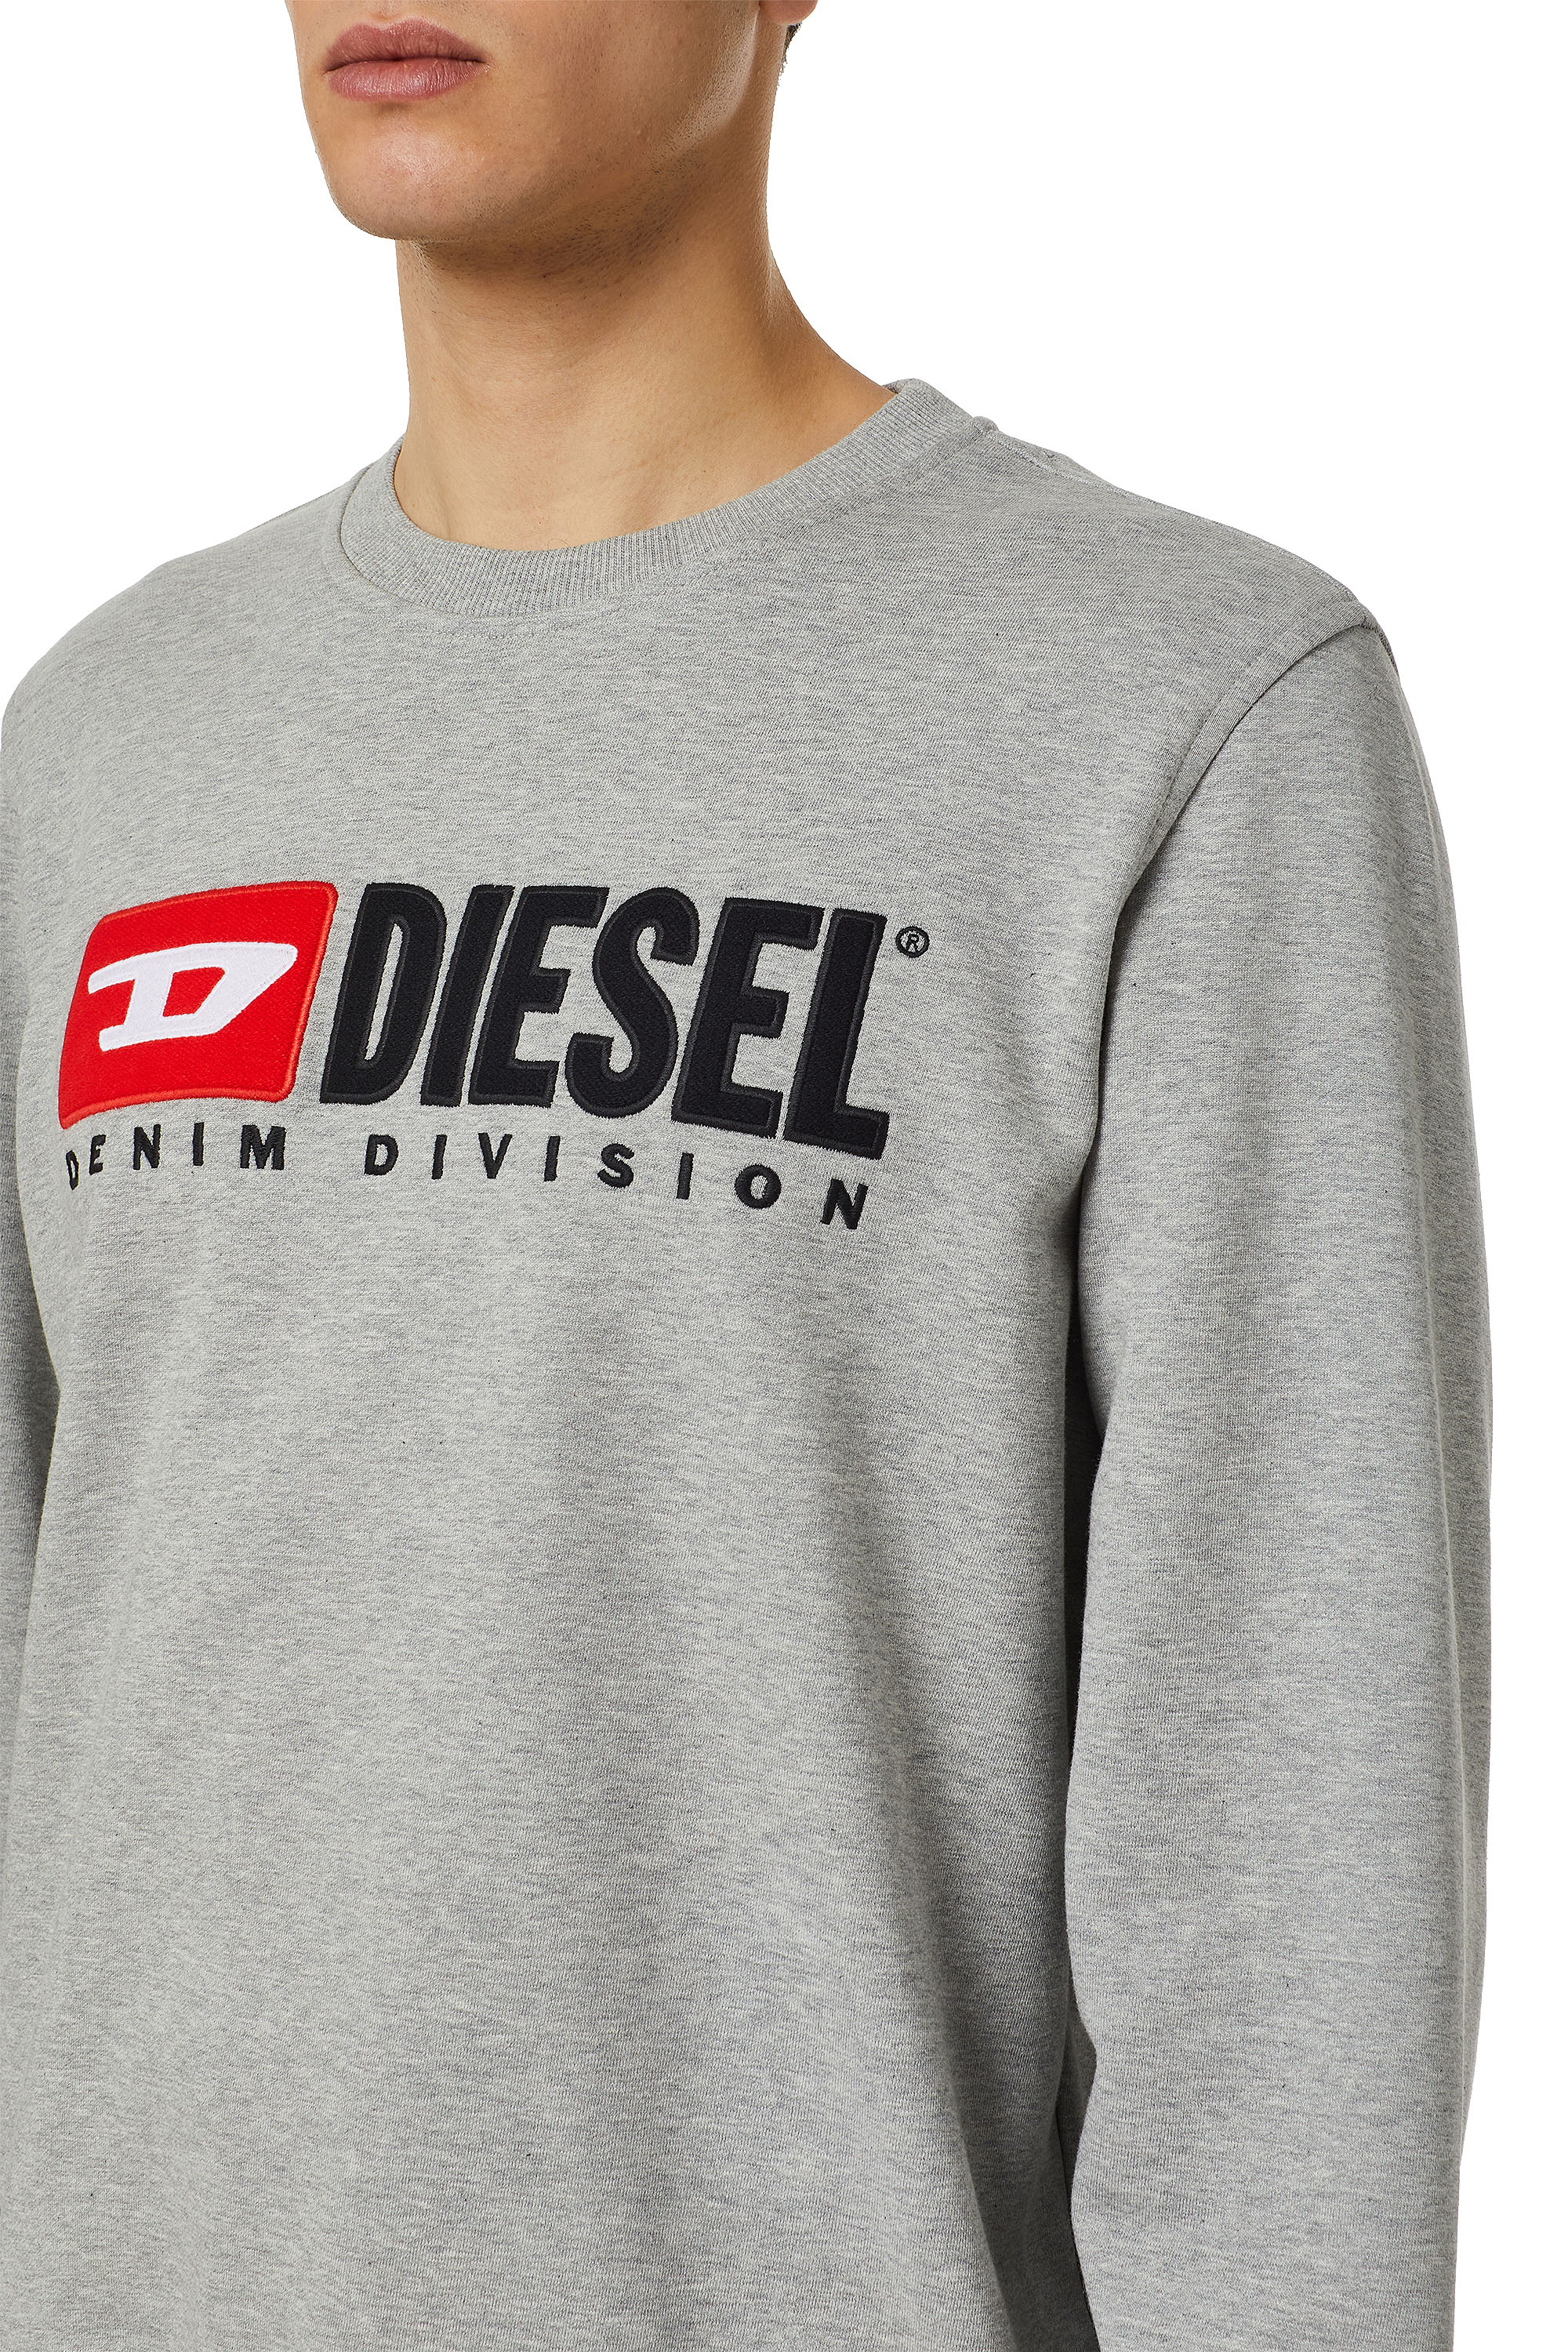 Diesel - S-GINN-DIV, グレー - Image 3